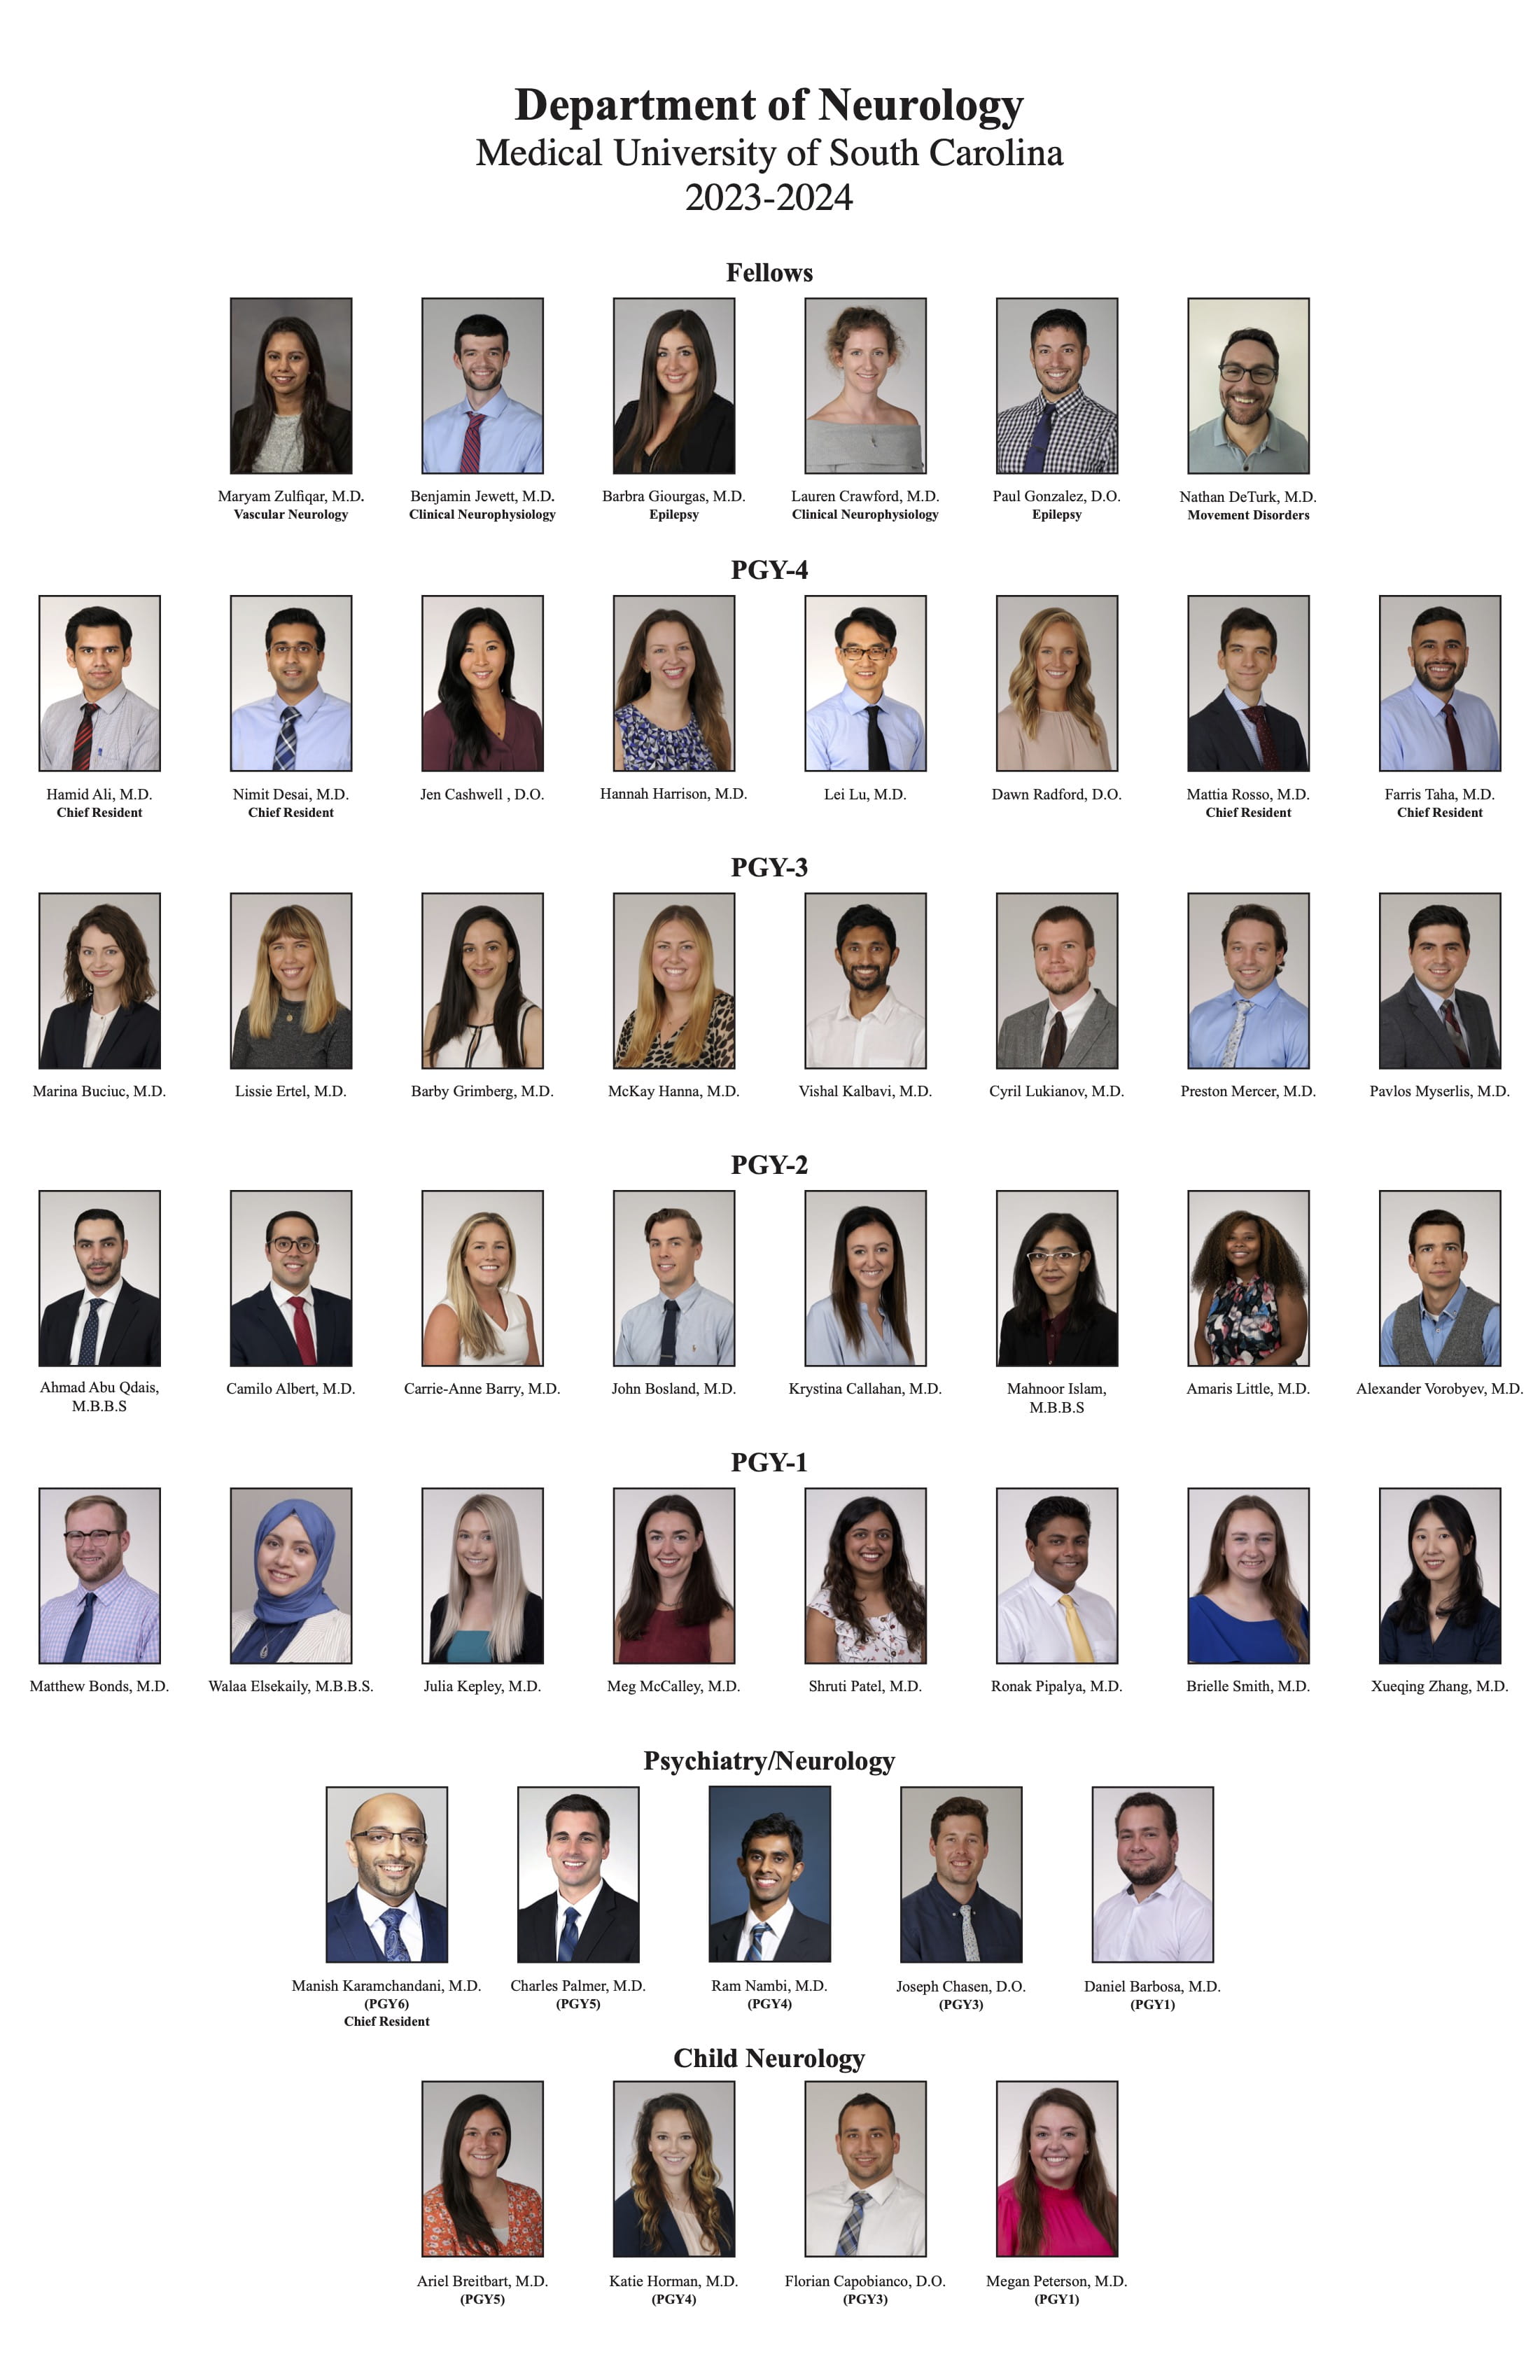 A composite of the fellows and residents in different training programs within the Department of Neurology at MUSC from 2021 to 2022. In the adult neurology residency, the PGY4 residents are Lauren Crawford, M.D., Isaac Goldszer, M.D., Paul Gonzalez, D.O., Kyle Paulk, M.D., chief resident Ganga Navada, M.D., and Joseph Ta, M.D. The PGY3 residents are Muayad Alzuabi, M.D., Anna Bashmakov, M.D., Angel Cadena, M.D., Cori Cummings, M.D., Jessica Decker, D.O., Benjamin Jewett, M.D., Ashley Nelson, D.O., and Mark Rosenberg, M.D. The PGY2 residents are Hamid Ali, M.D., Jen Cashwell, D.O, Nimit Desai, M.D., Hanna Harrison, M.D., MBA, Lei Lu, M.D., Ph.D., MS, Dawn Crawford, D.O., Mattia Rosso, M.D., and Farris Taha, M.D. The pgy1 residents are Marina Buciuc, M.D., Lissie Ertel, M.D., Barby Grimberg, M.D., McKay Hanna, M.D., Vishal Kalbavi, M.D., Cyril Lukianov, M.D., Preston Mercer, M.D., and Pavlos Myserlis, M.D. The residents in the combined psychiatry/neurology program are PGY5 chief resident Helen Dainton Howard, M.D., PGY4 Manish Karamchandani, M.D., PGY3 Charles Palmer, M.D., pgy2 Ram Nambi, M.D., and pgy1 Joseph Chasen, D.O. The residents in the child neurology program are PGY5 chief resident Barbra Giourgas, M.D., PGY4 Reshma Joshi, D.O., PGY3 Ariel Breitbart, M.D., pgy2 Katie Horman, M.D., and pgy1 Florian Capobianco, D.O. The fellows in the department are vascular neurology fellows Line Abdul Rahman, M.D., and Cassie Nankee, M.D.,  epilepsy fellow Alexandra Parashos, M.D., clinical neurophysiology fellows Neha Gandhi, M.D. and Shirani Rajan, M.D., and movement disorders fellow Cherry Yu, M.D.